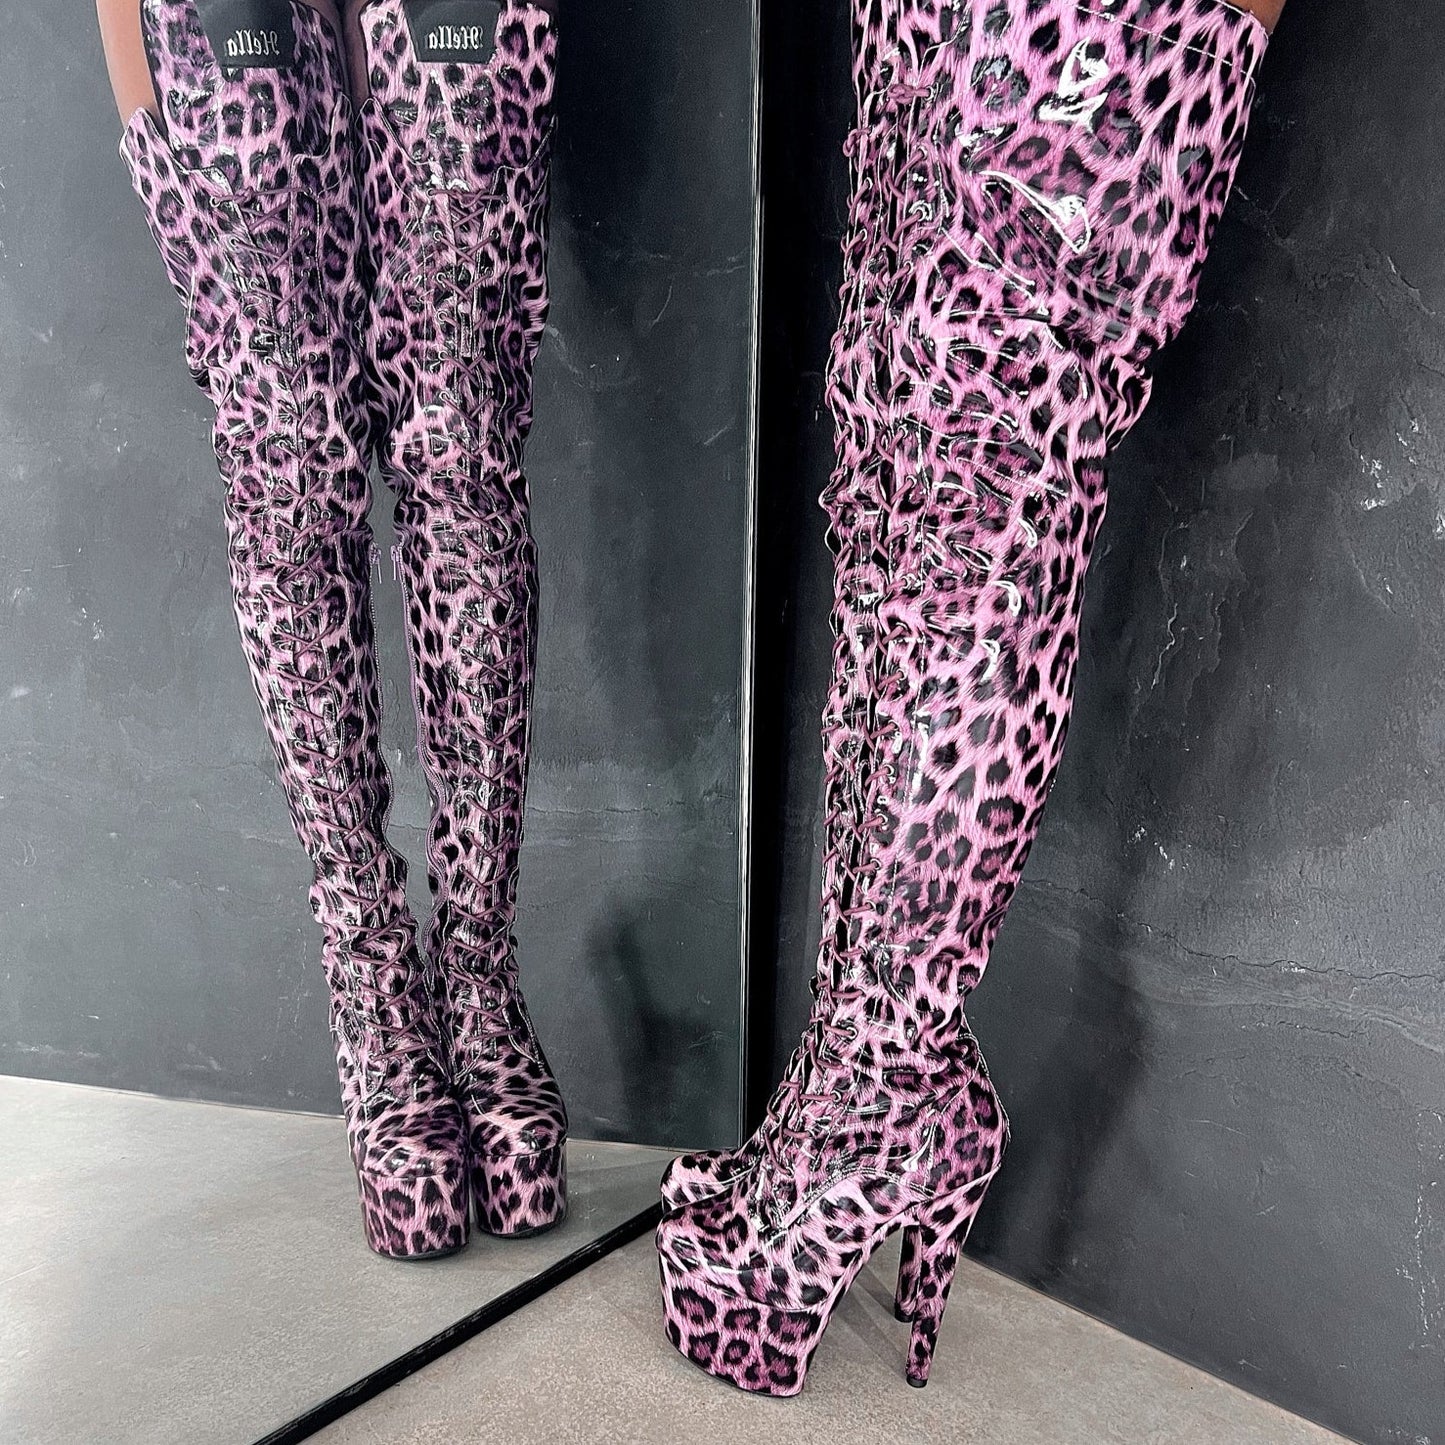 Purple Leopard Thigh High - 7 INCH + SP, stripper shoe, stripper heel, pole heel, not a pleaser, platform, dancer, pole dance, floor work